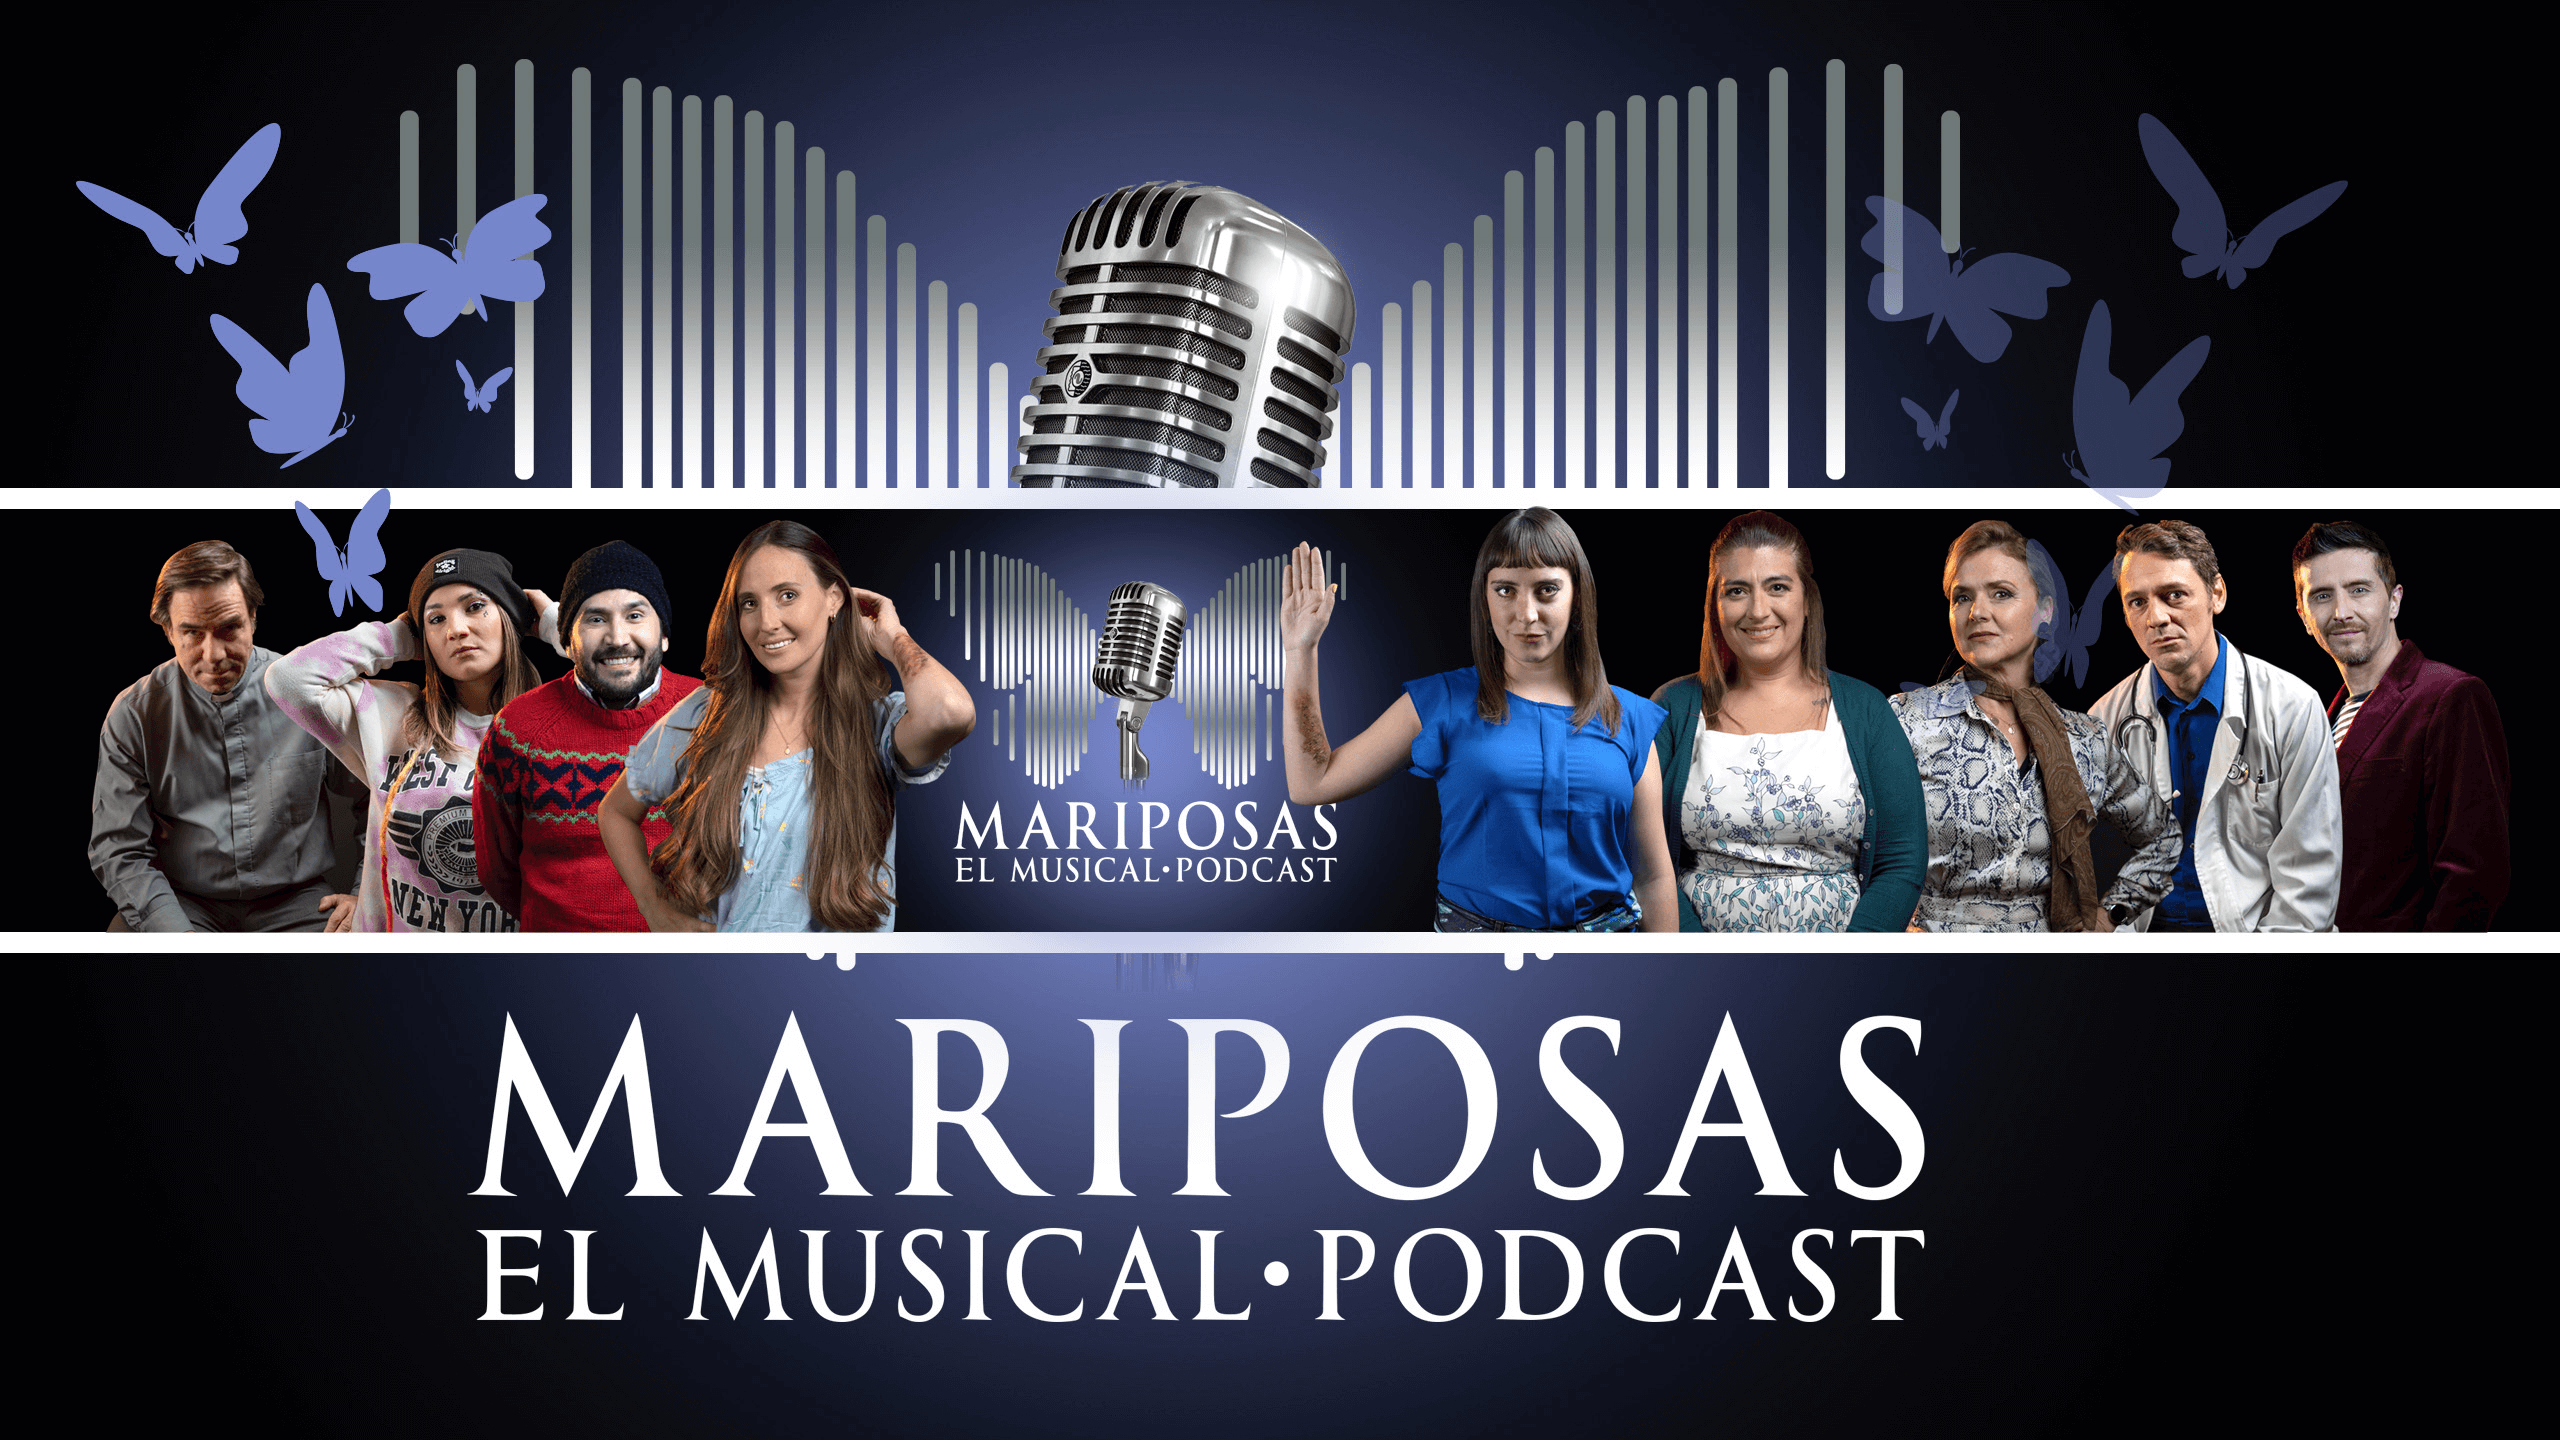 Mariposas el musical podcast